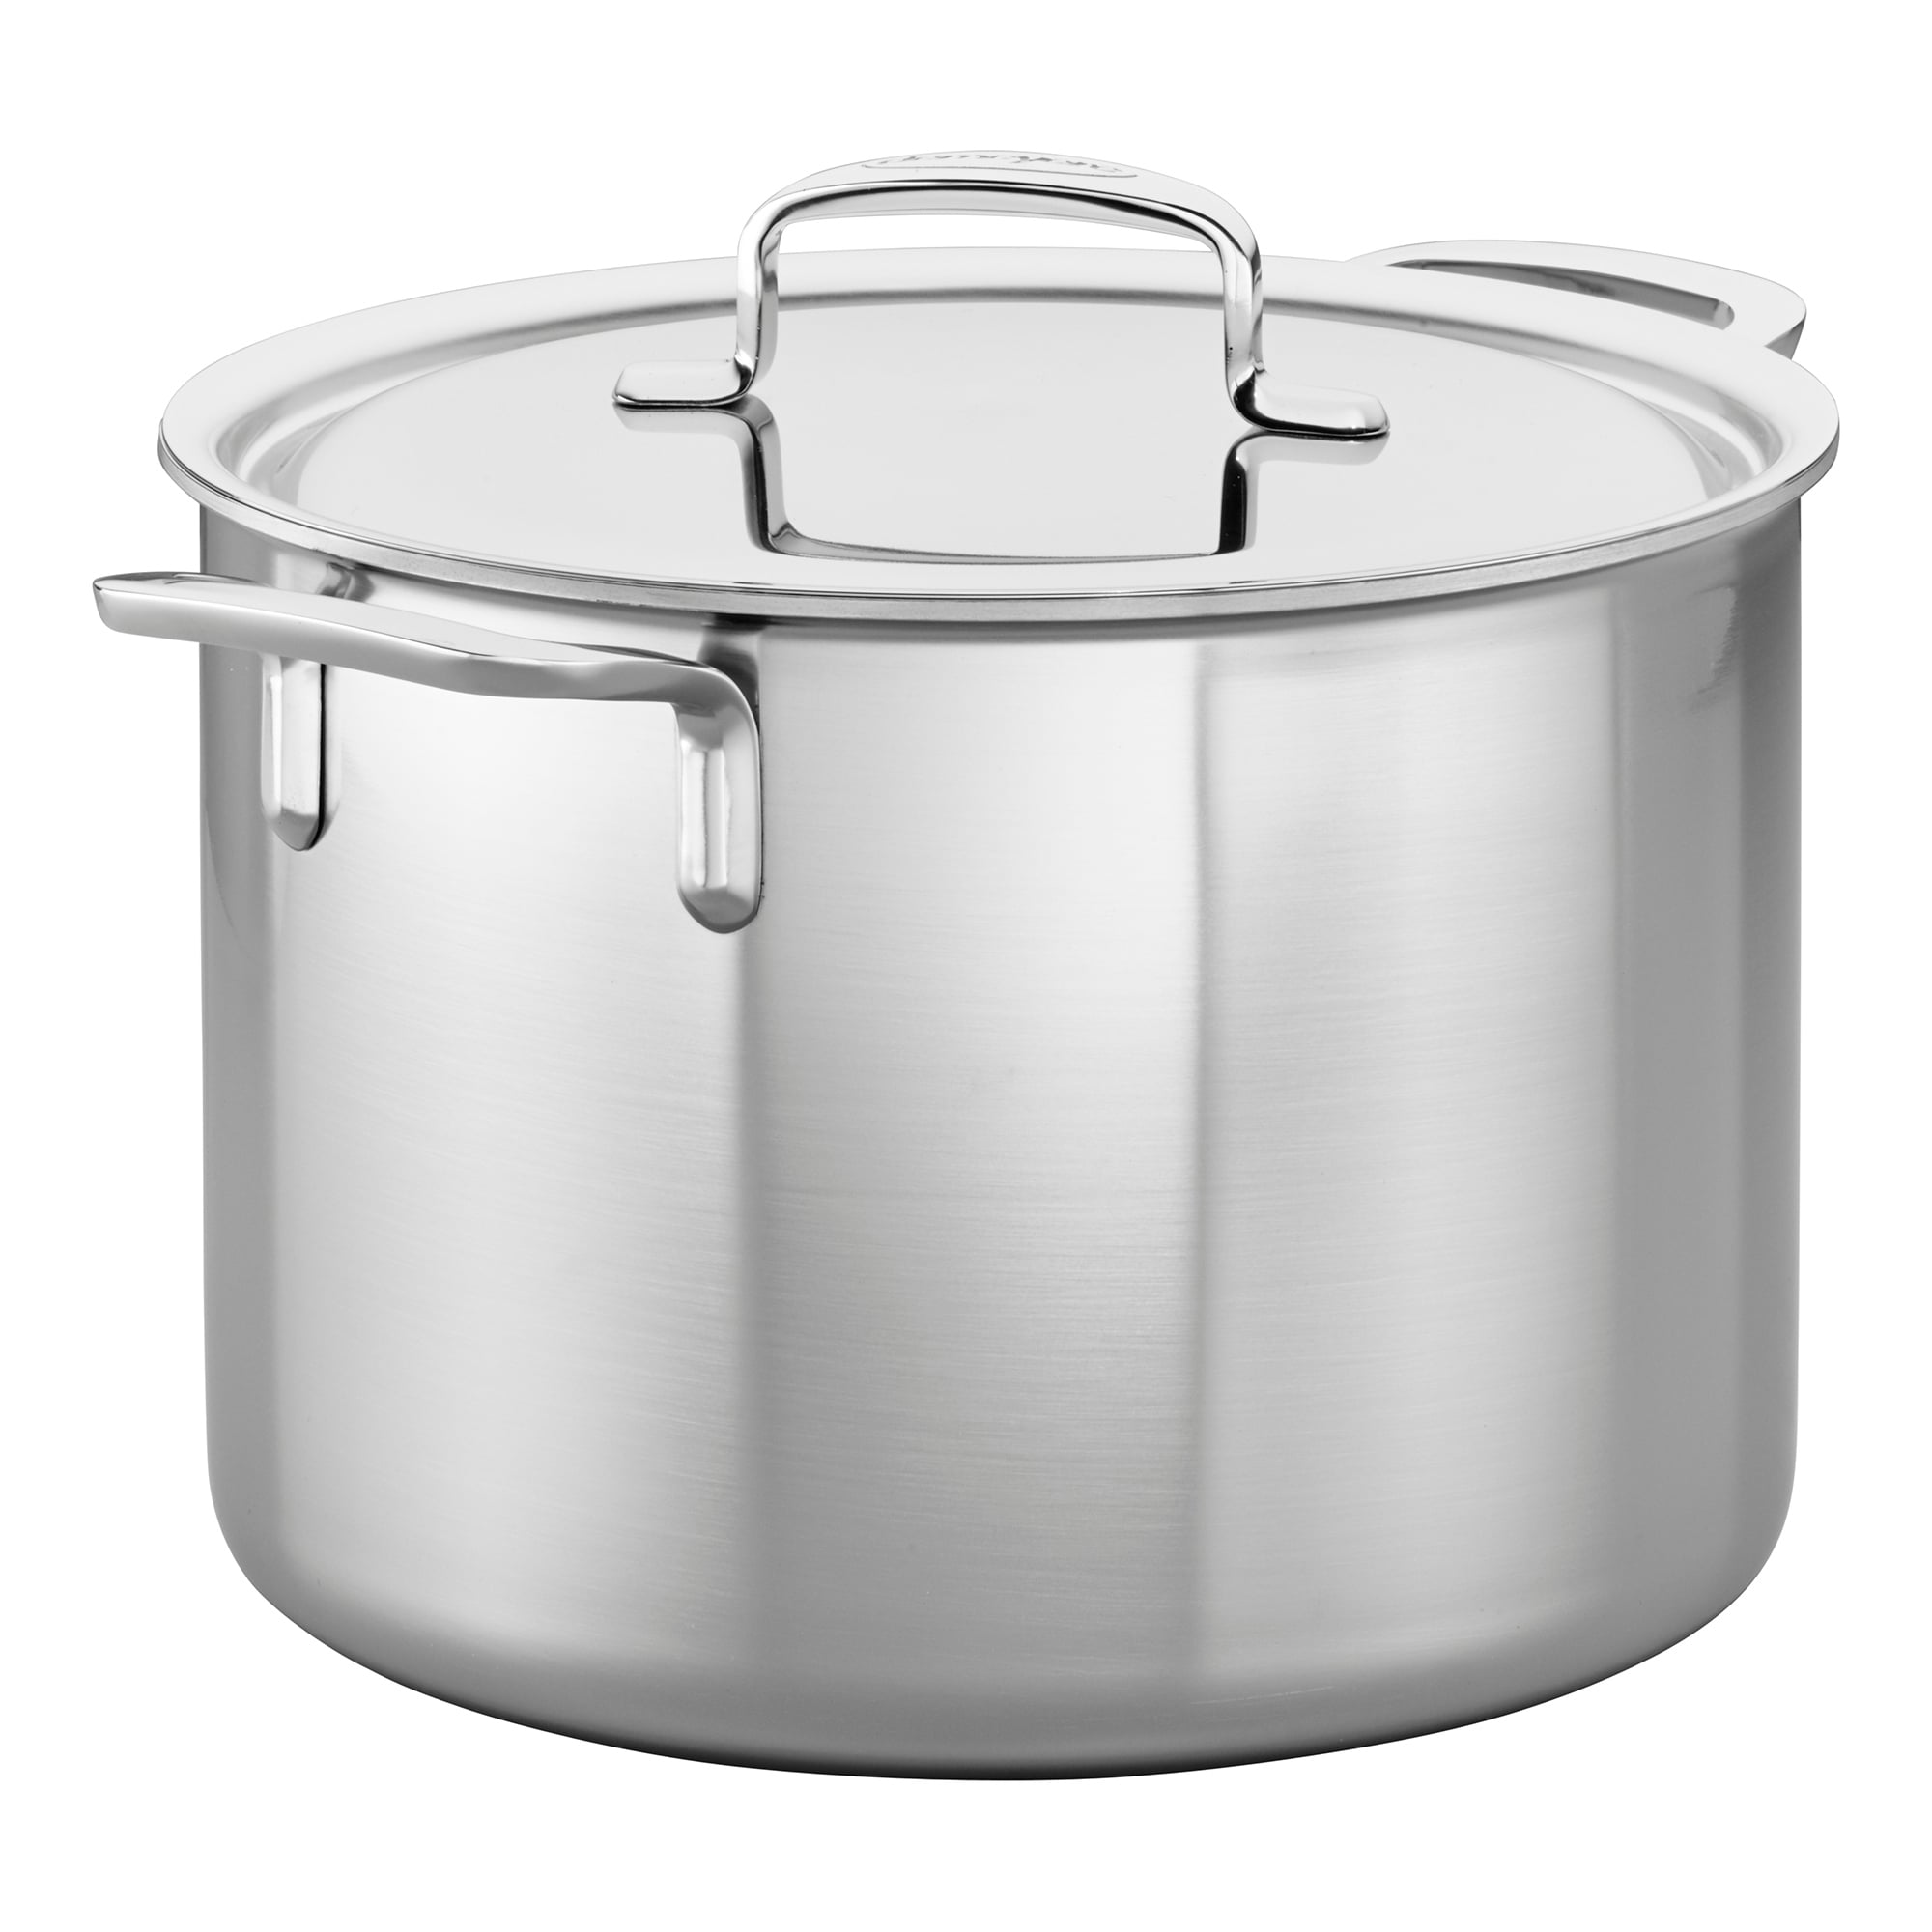 Demeyere Essential 5 8 qt Stock pot, 18/10 Stainless Steel